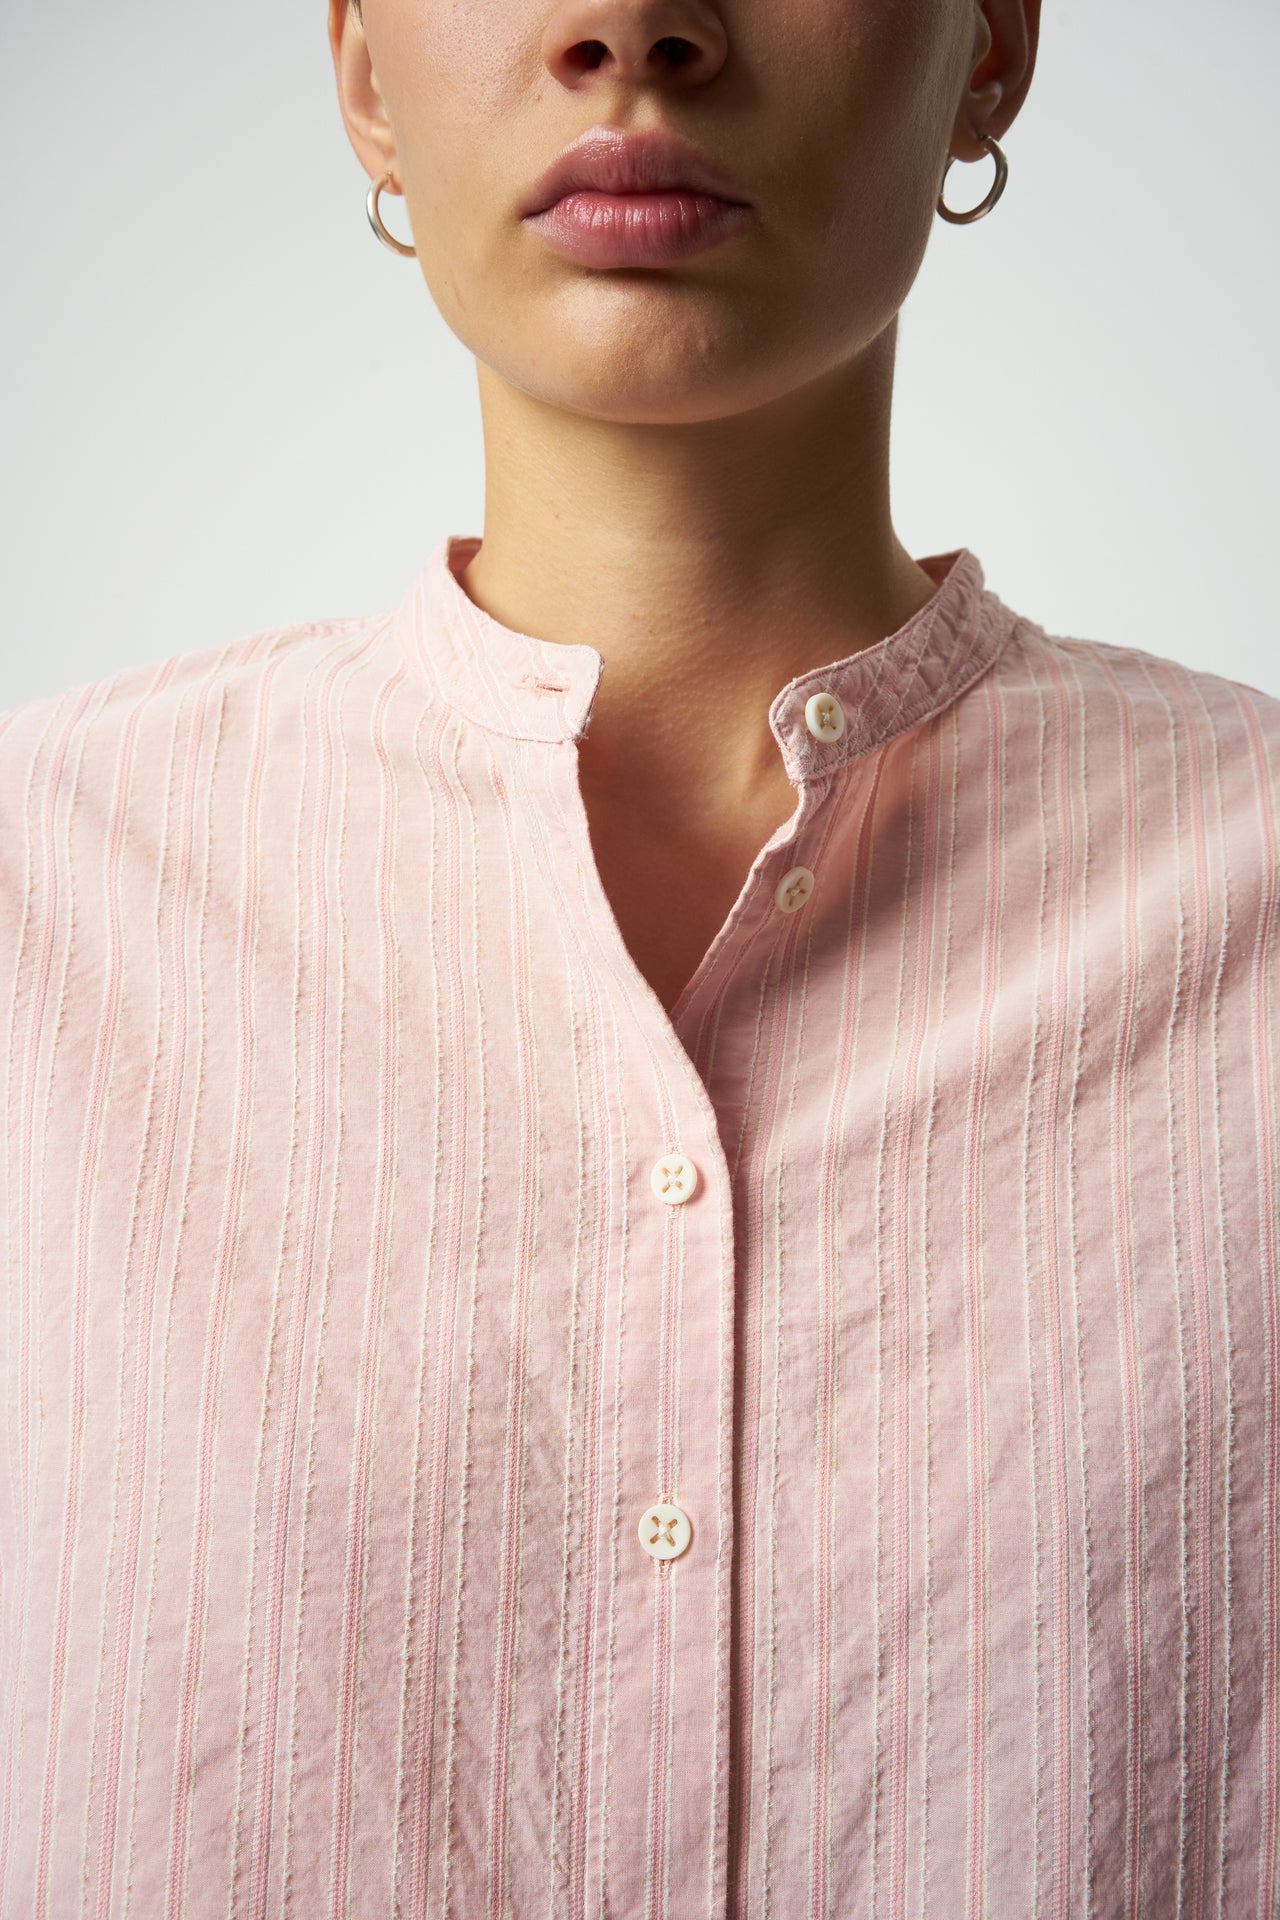 Zen Shirt in a Subtle Pink Striped Structural Italian Cotton